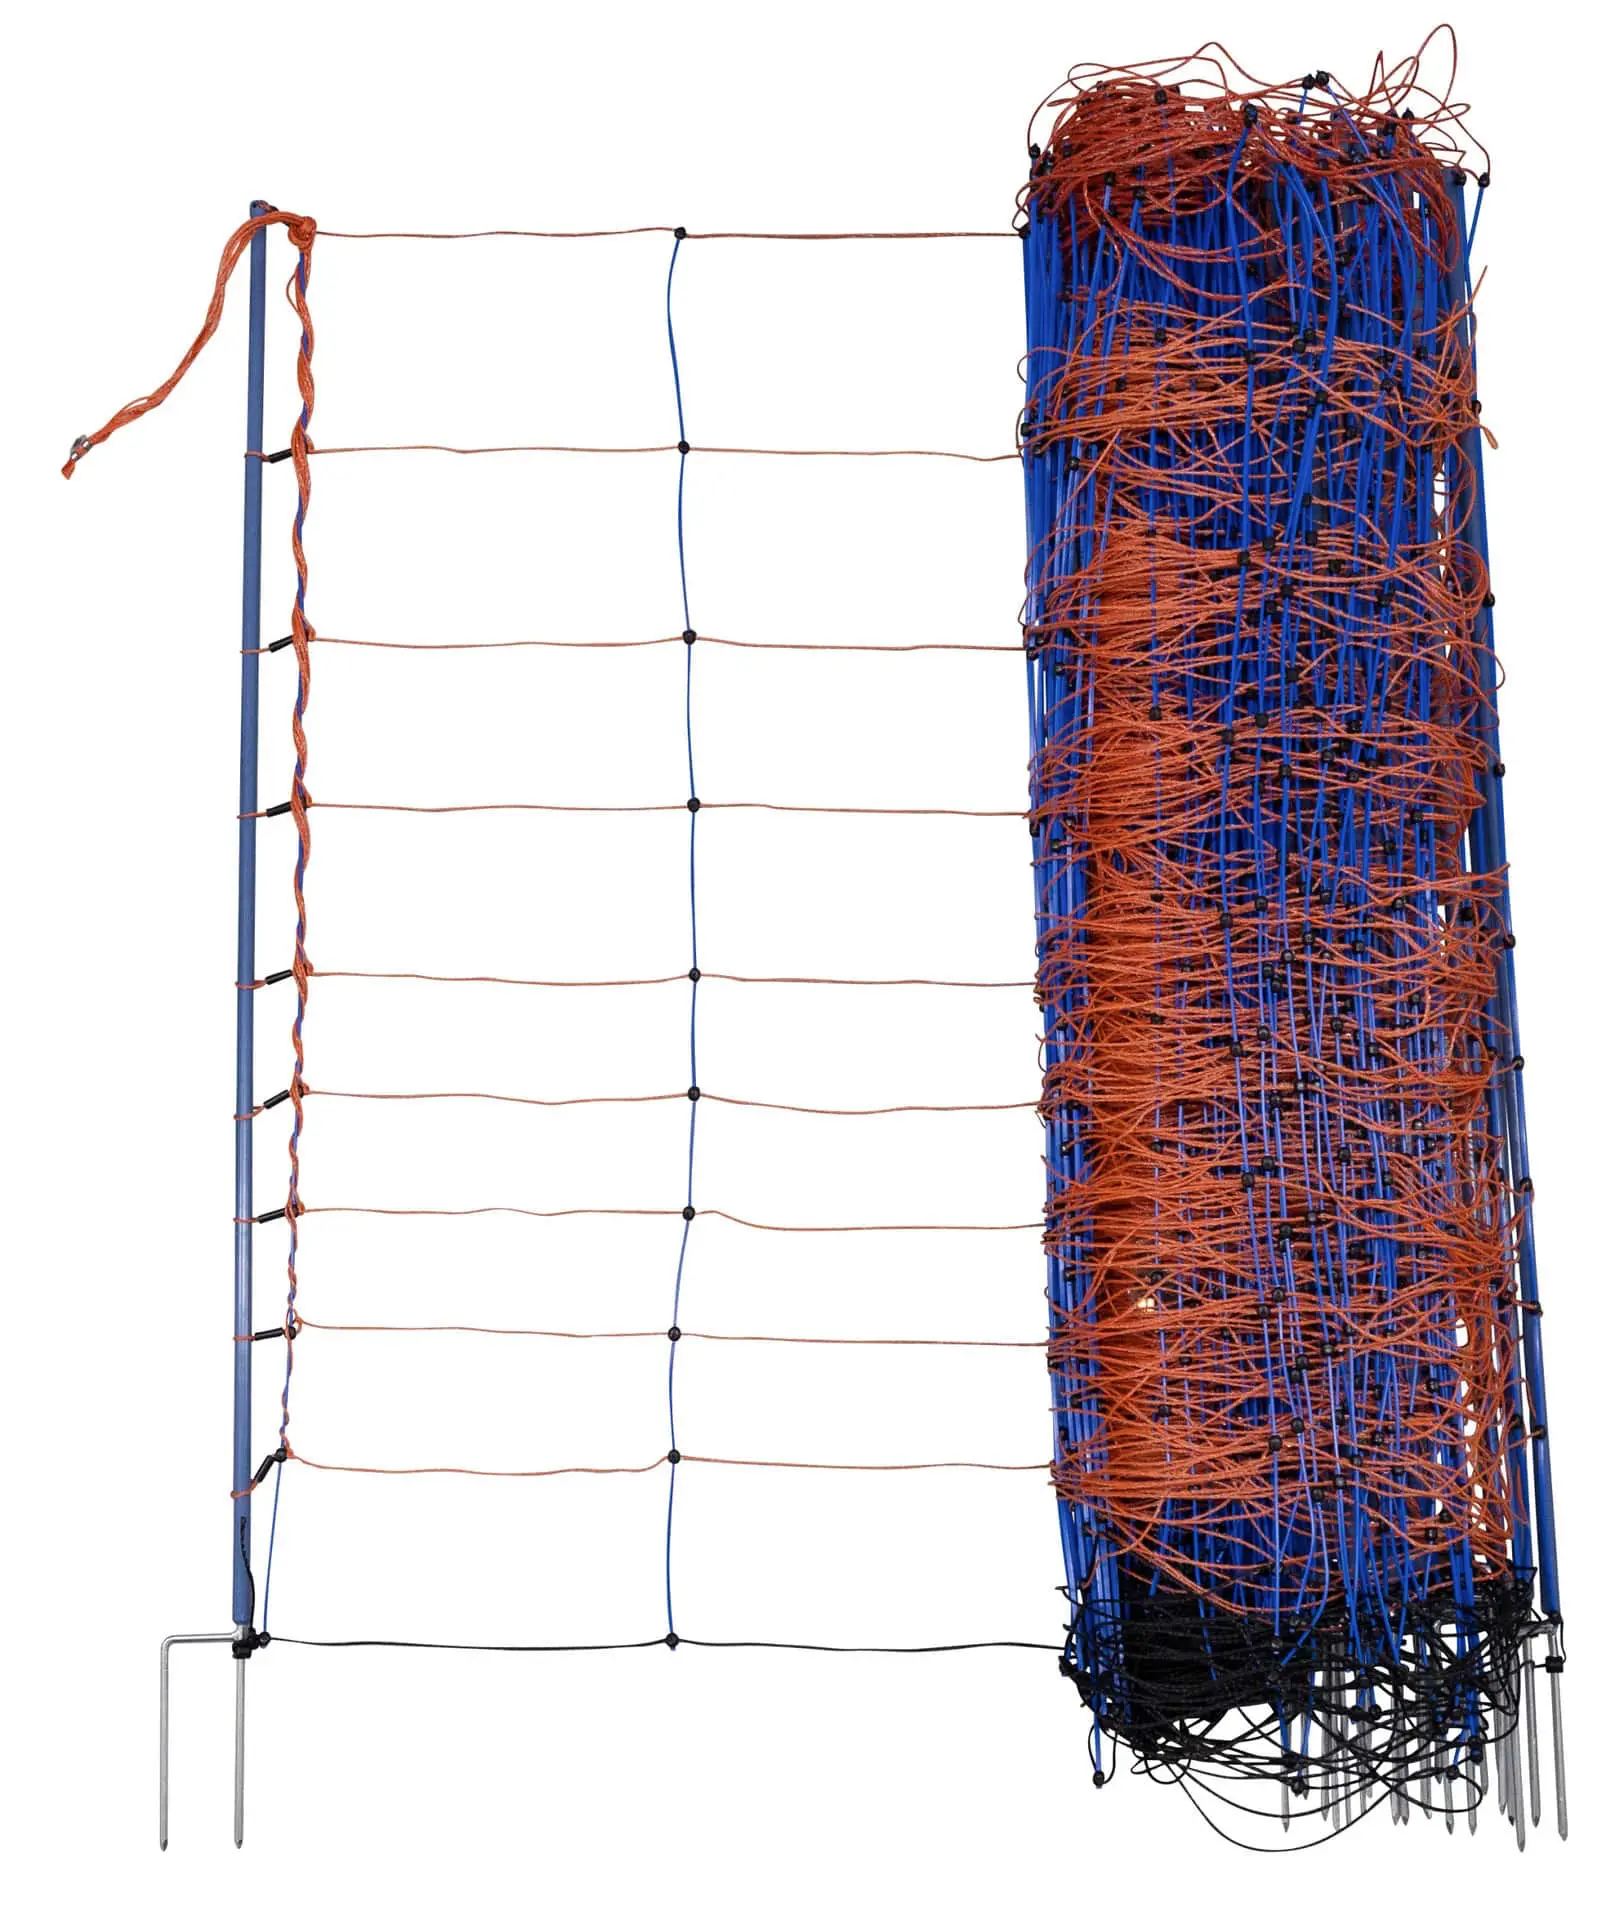 Plasa de oaie TitanNet Premium 50m x 108 cm portocaliu/albastru varf dublu